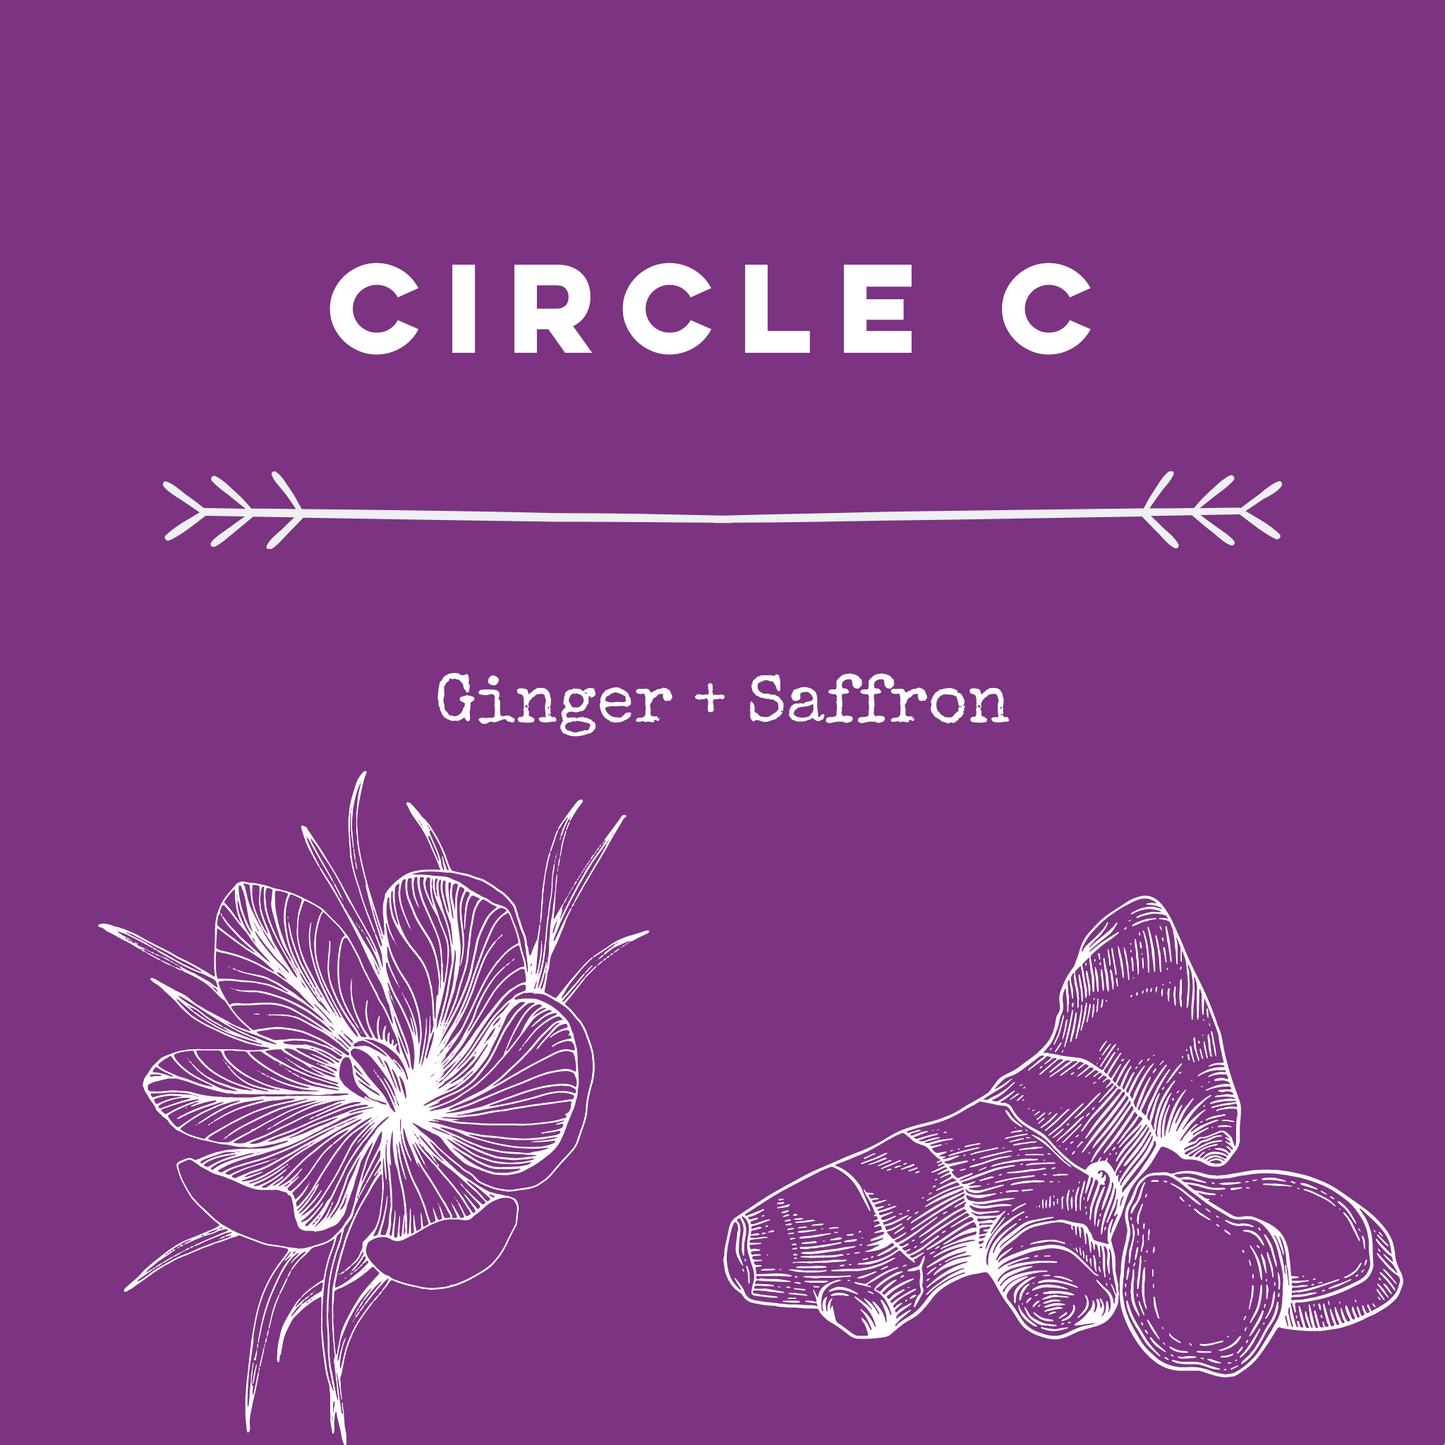 Circle C [Ginger + Saffron] Soy Candle / Wax Melt